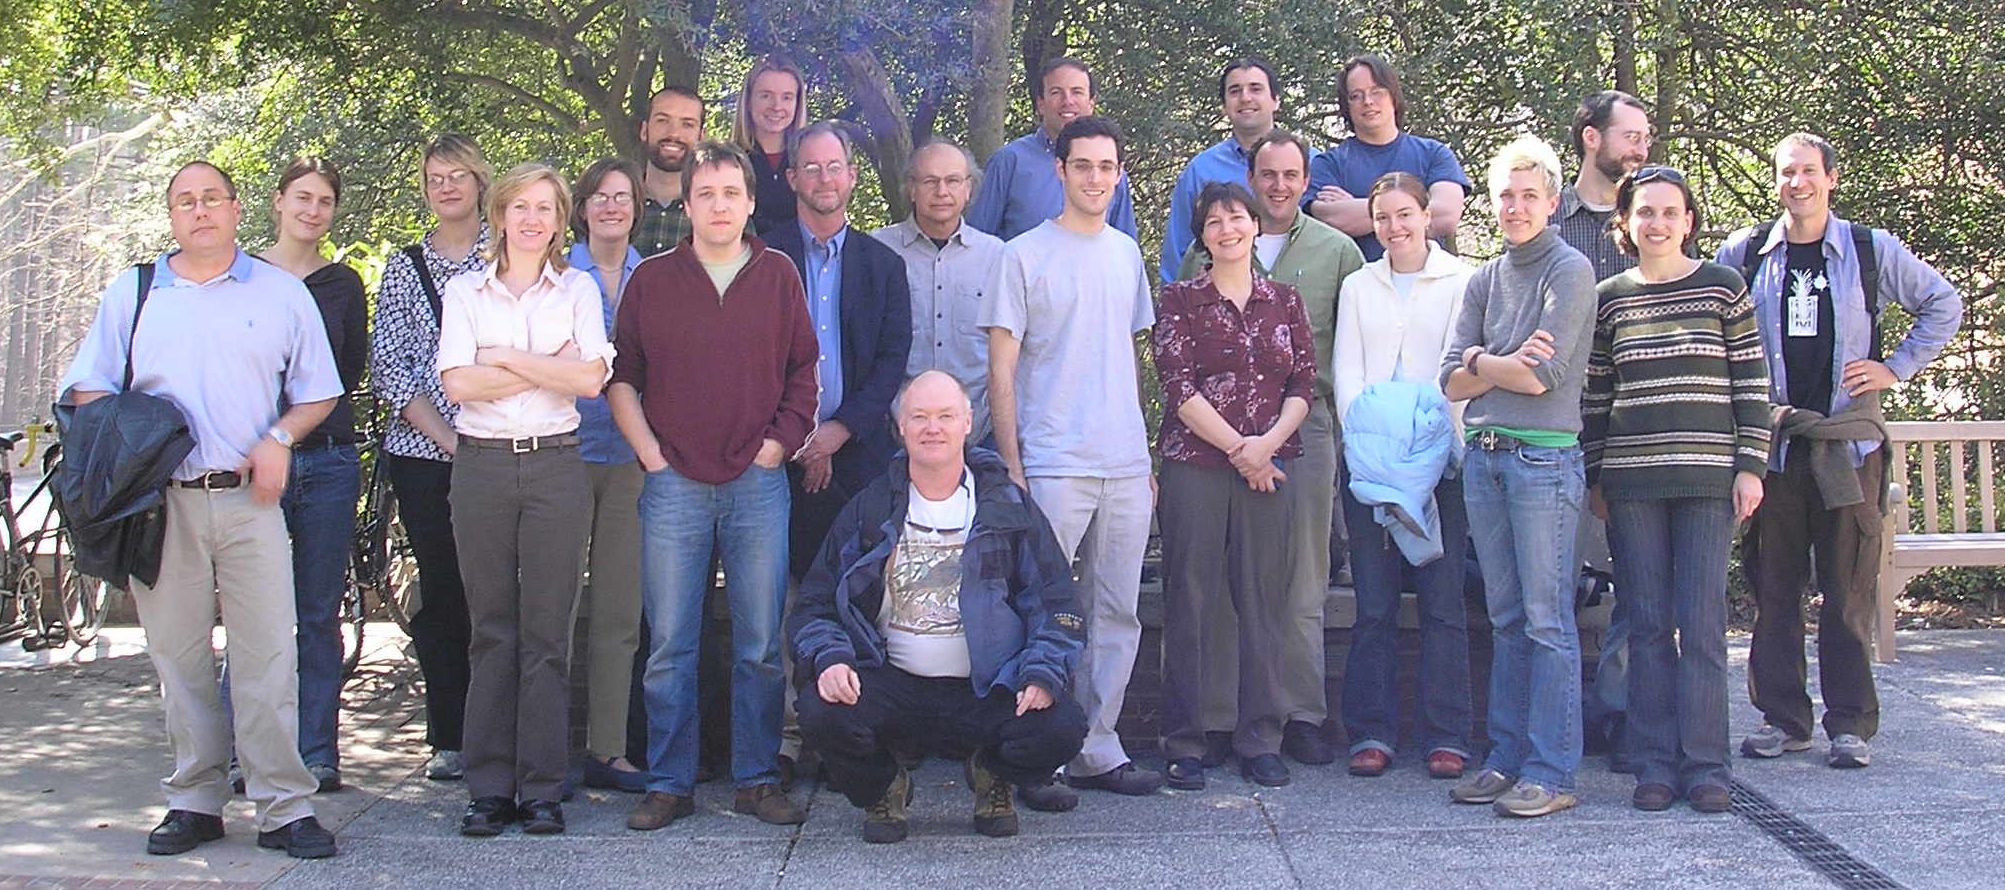 2006: Mimulus Meeting at Duke University